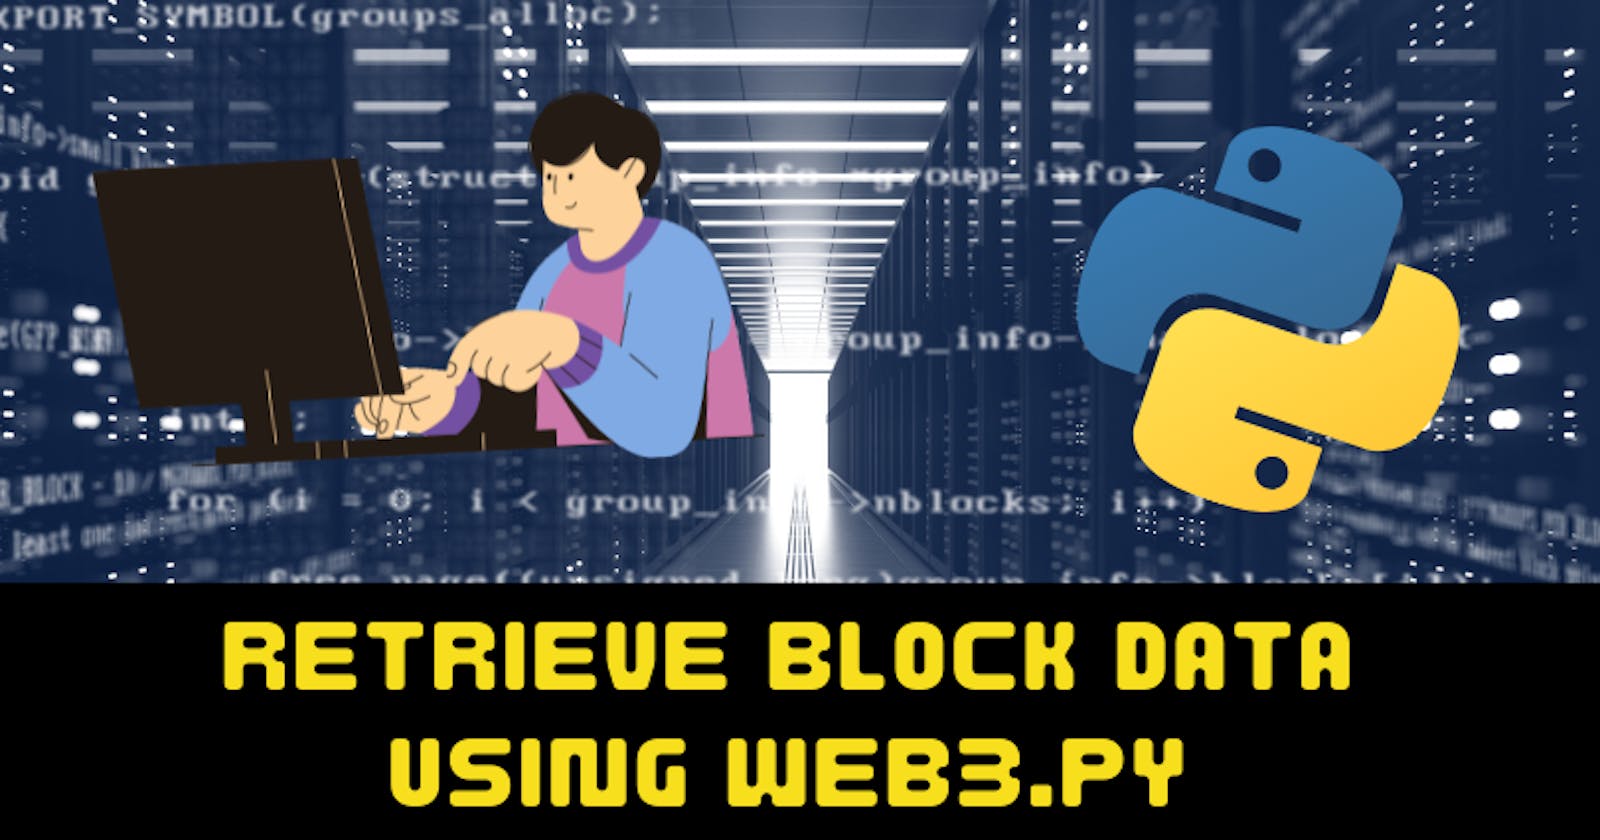 Retrieve and display block data using Web3.py